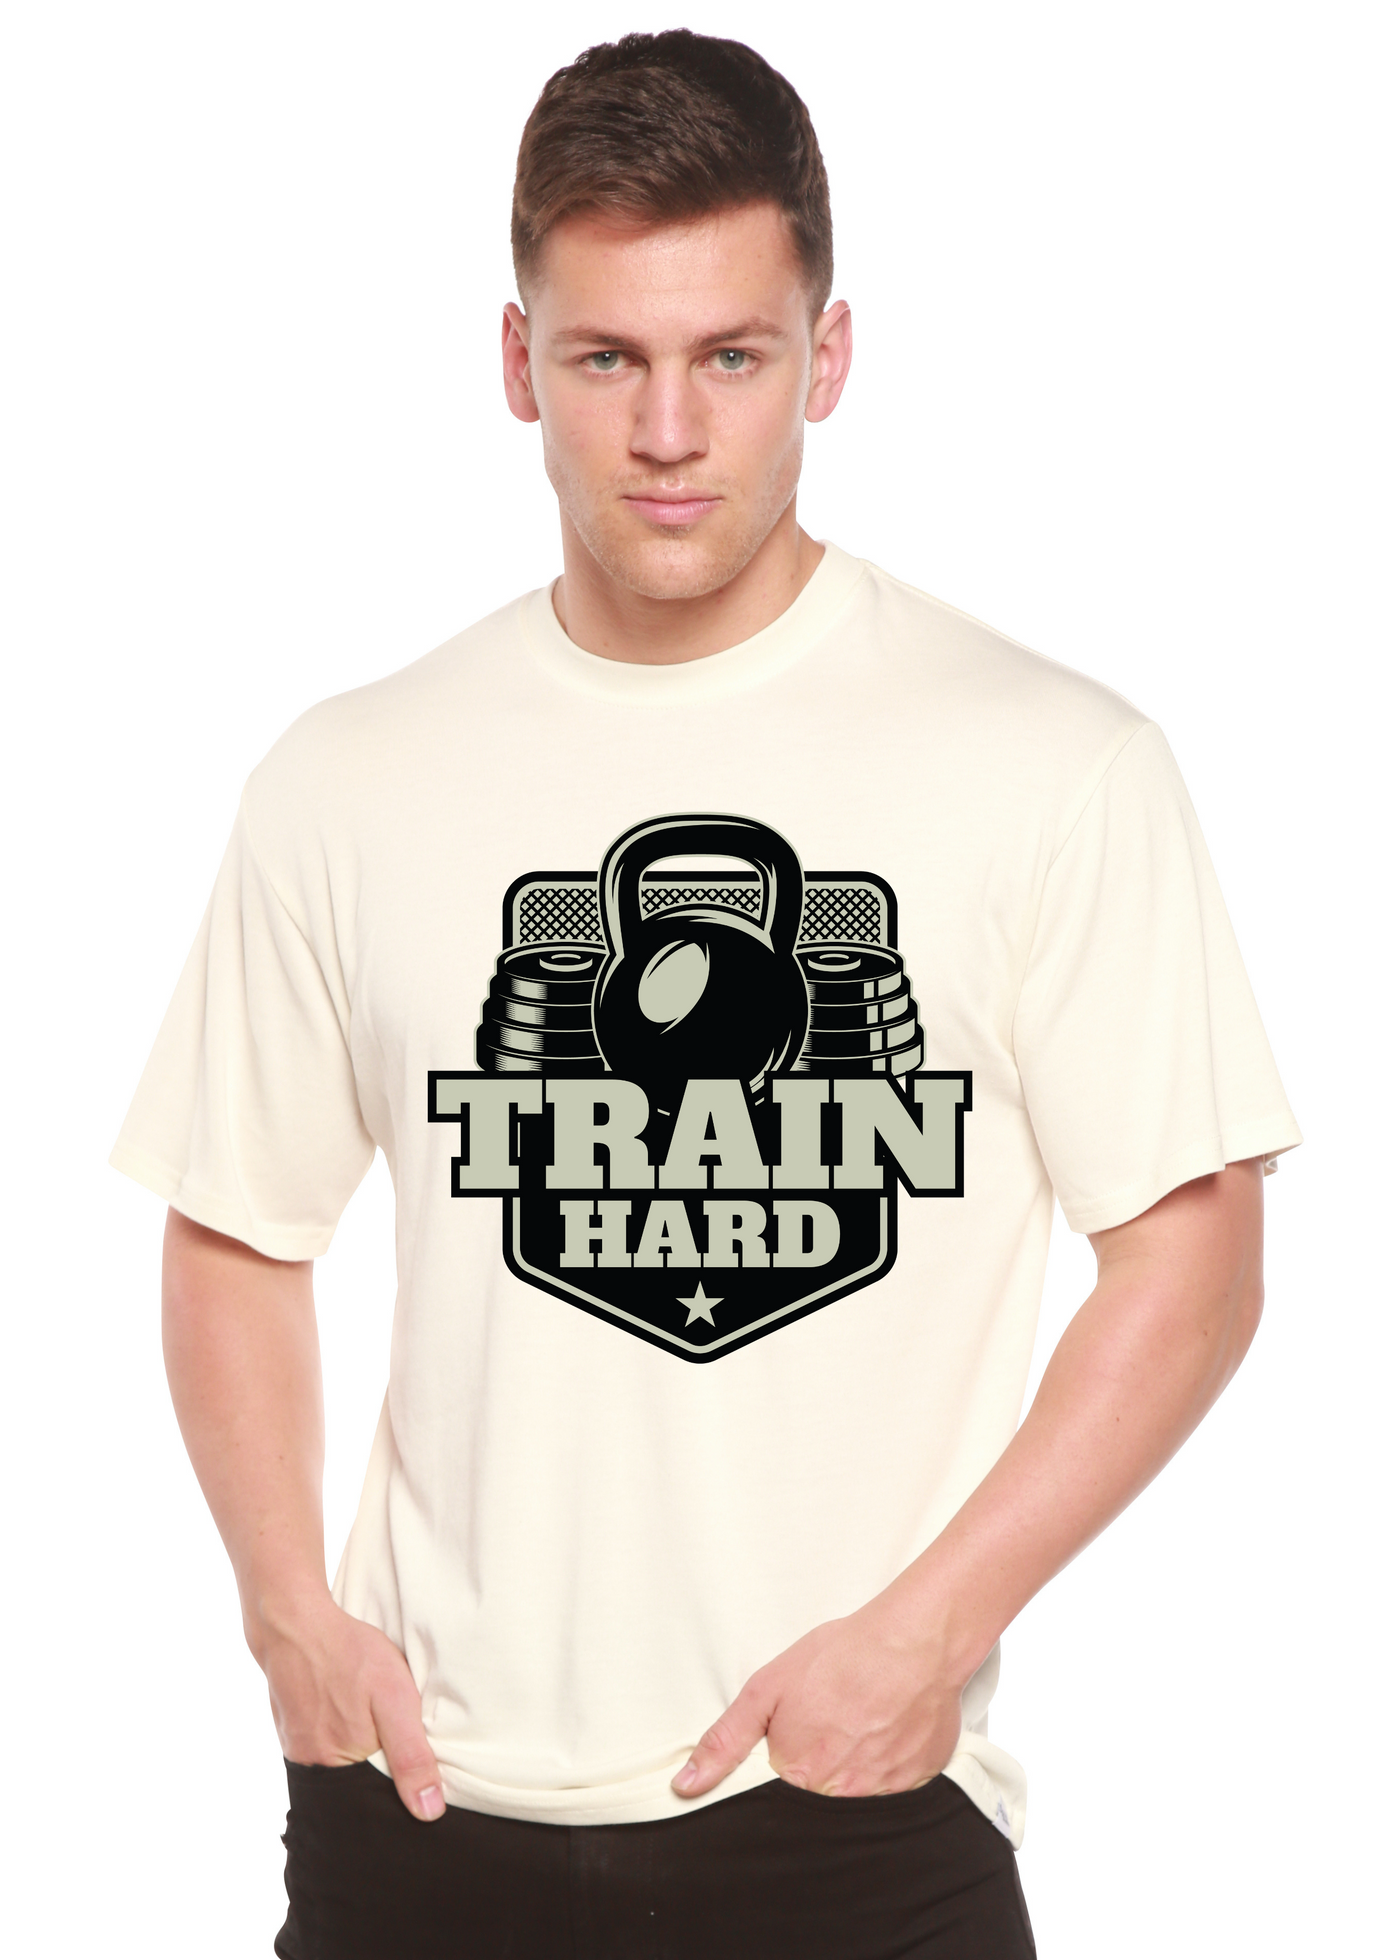 Train Hard men's bamboo tshirt white